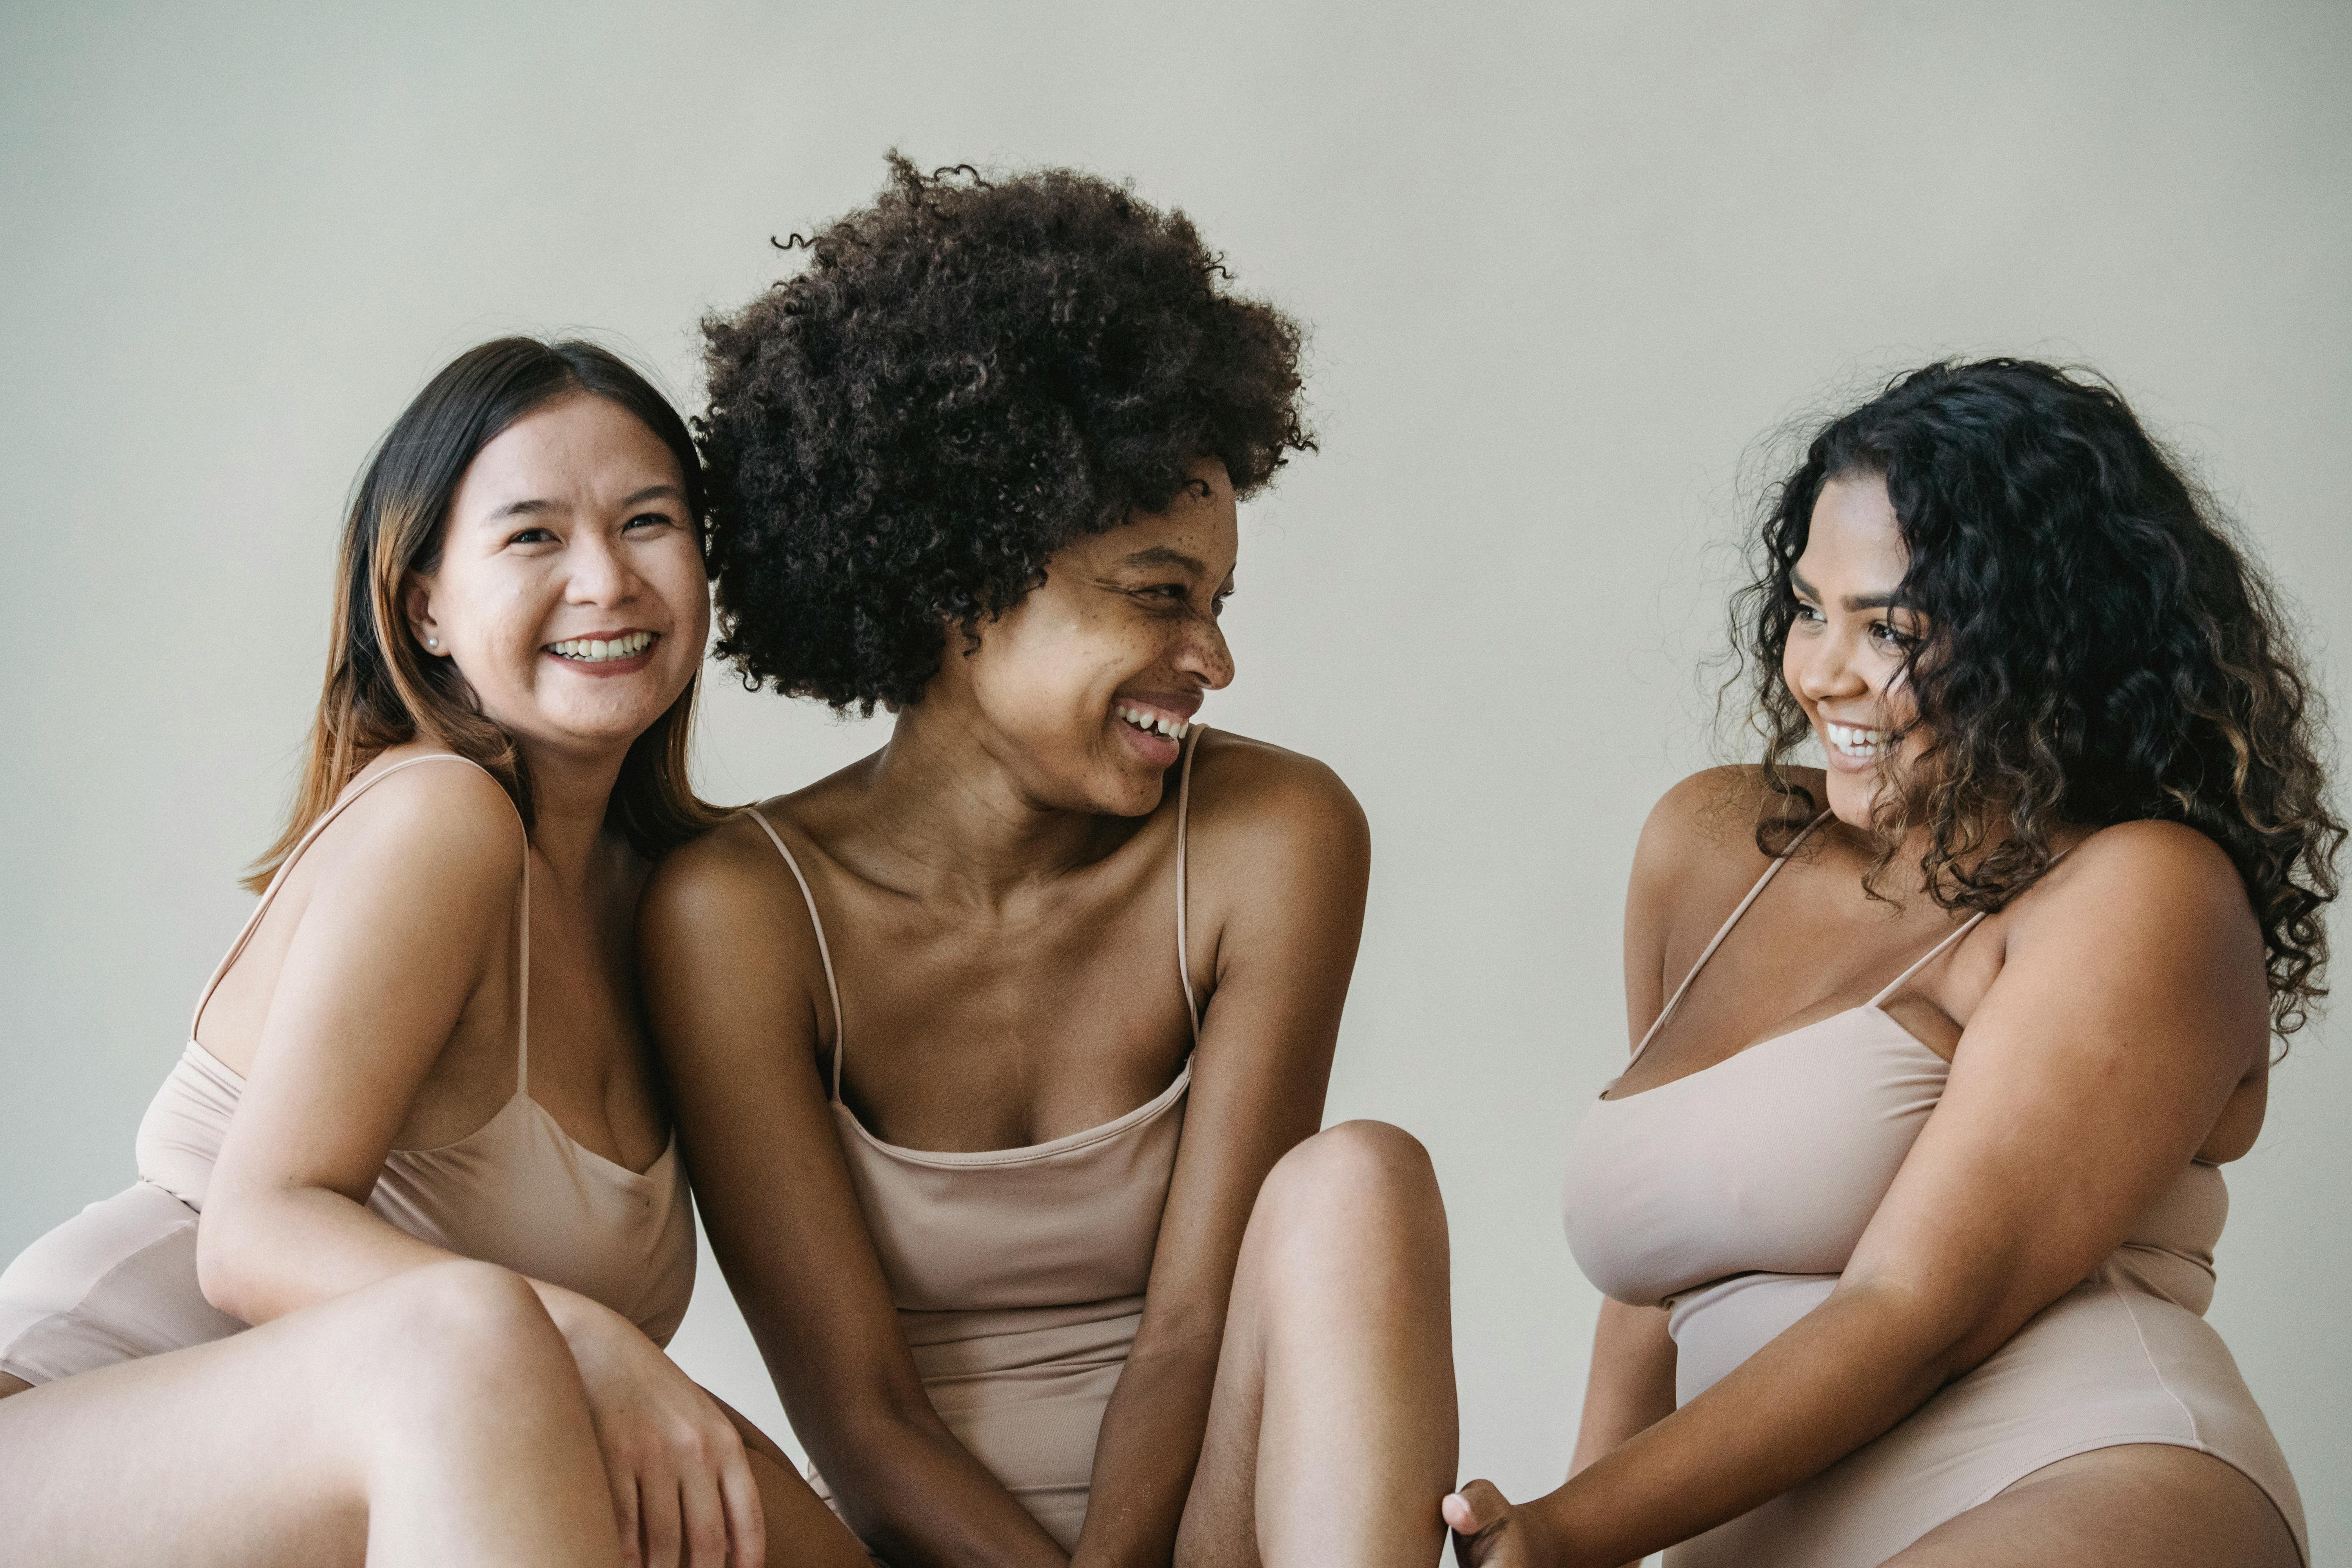 Women Posing in Nude Bodysuits Smiling · Free Stock Photo